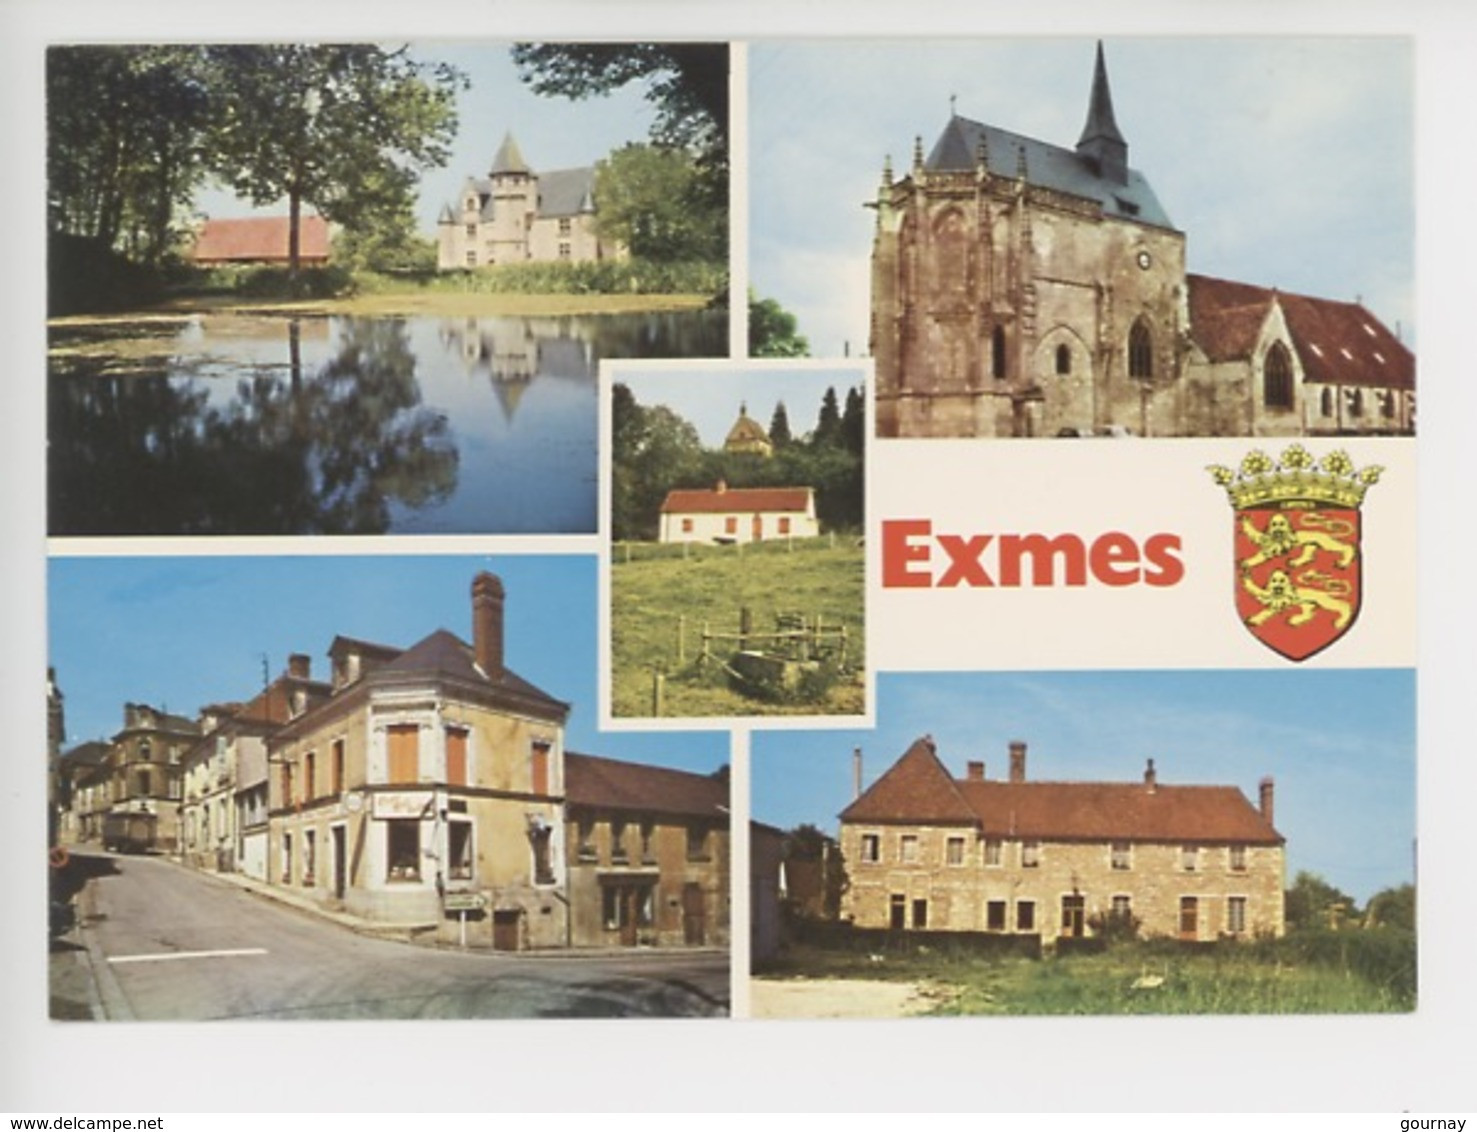 Exmes - Multivues Du Village, église Château, étang...) Blason - Cp Vierge N°7538 - Exmes